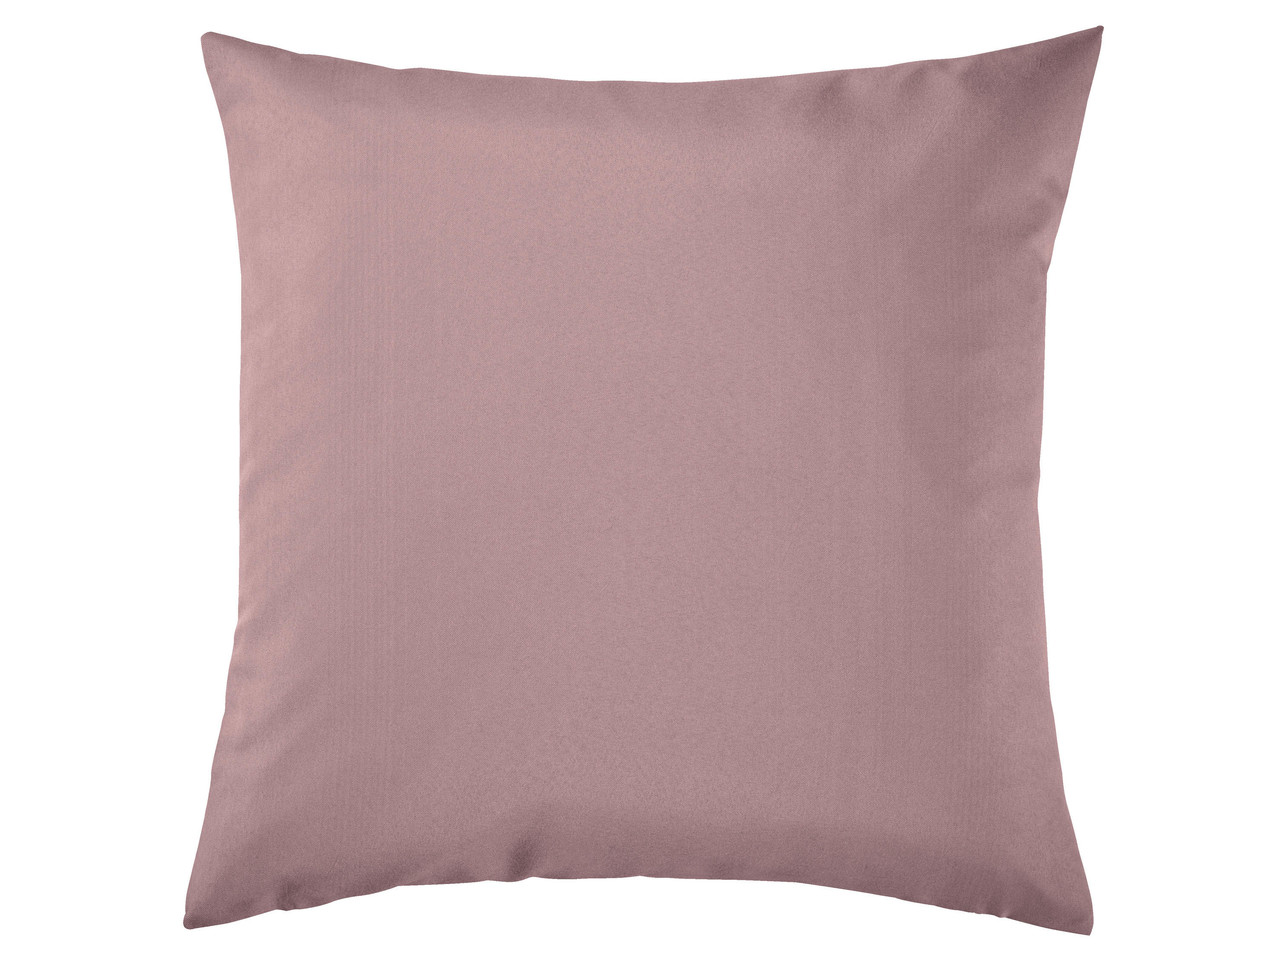 MERADISO Cushion Covers